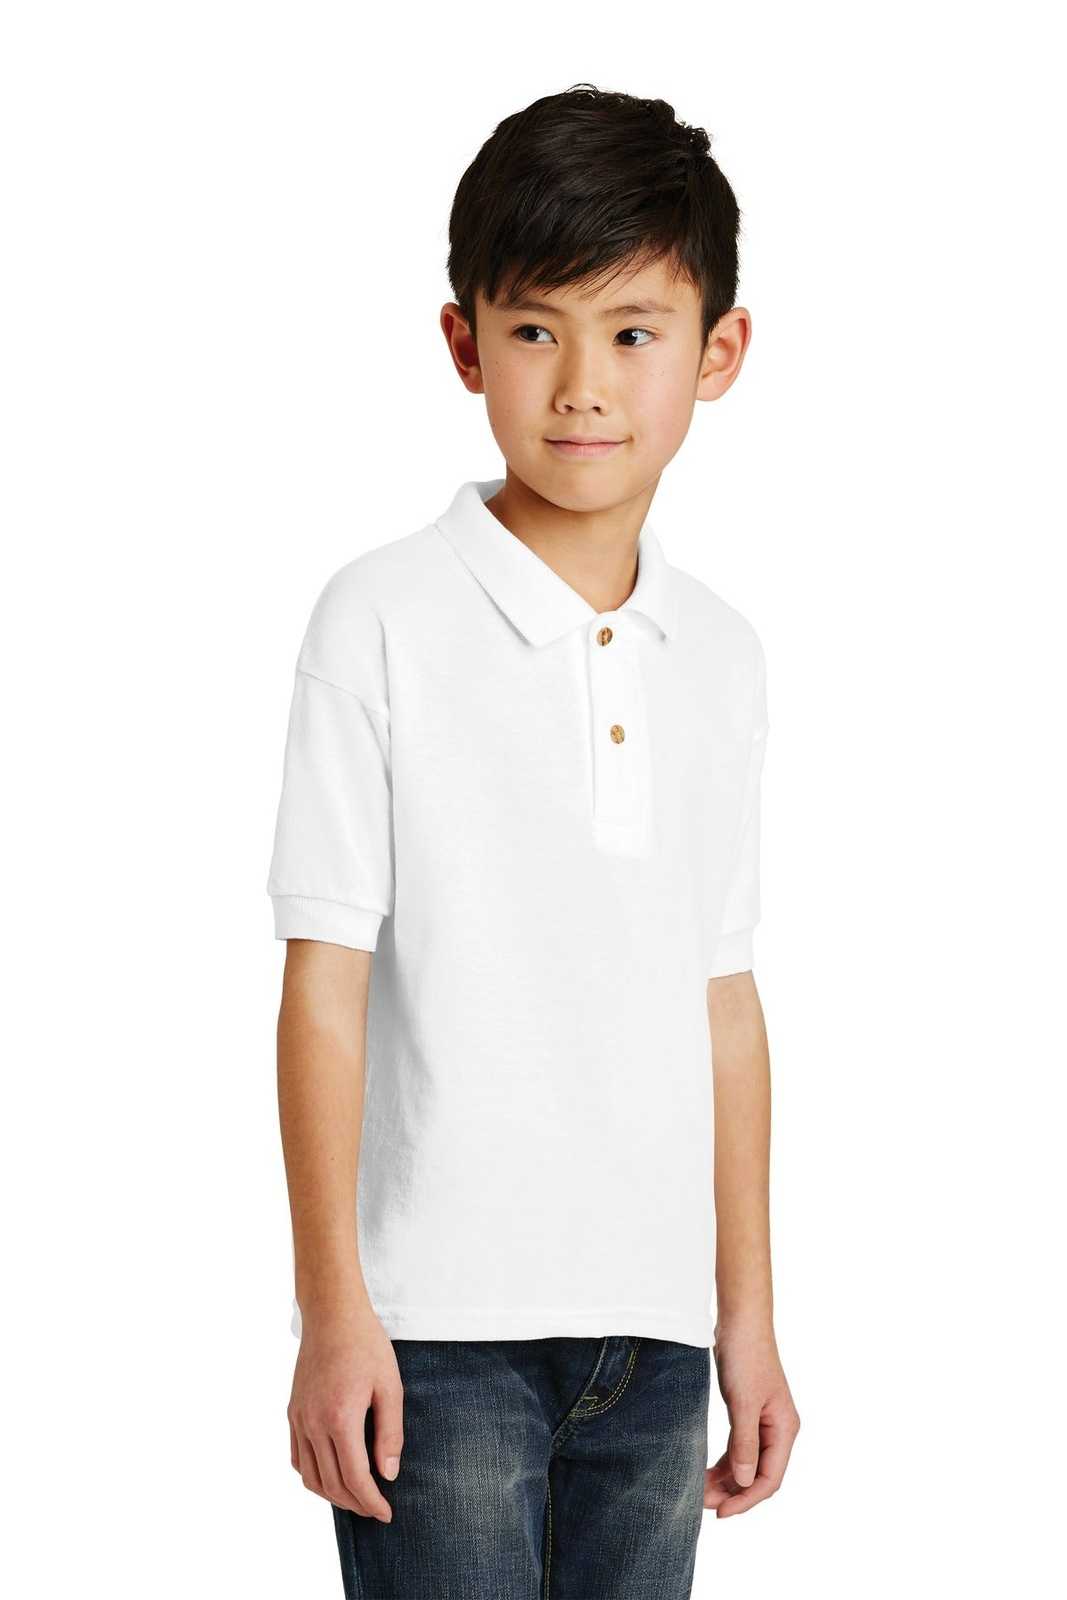 Gildan 8800B Youth Dryblend 6-Ounce Jersey Knit Sport Shirt - White - HIT a Double